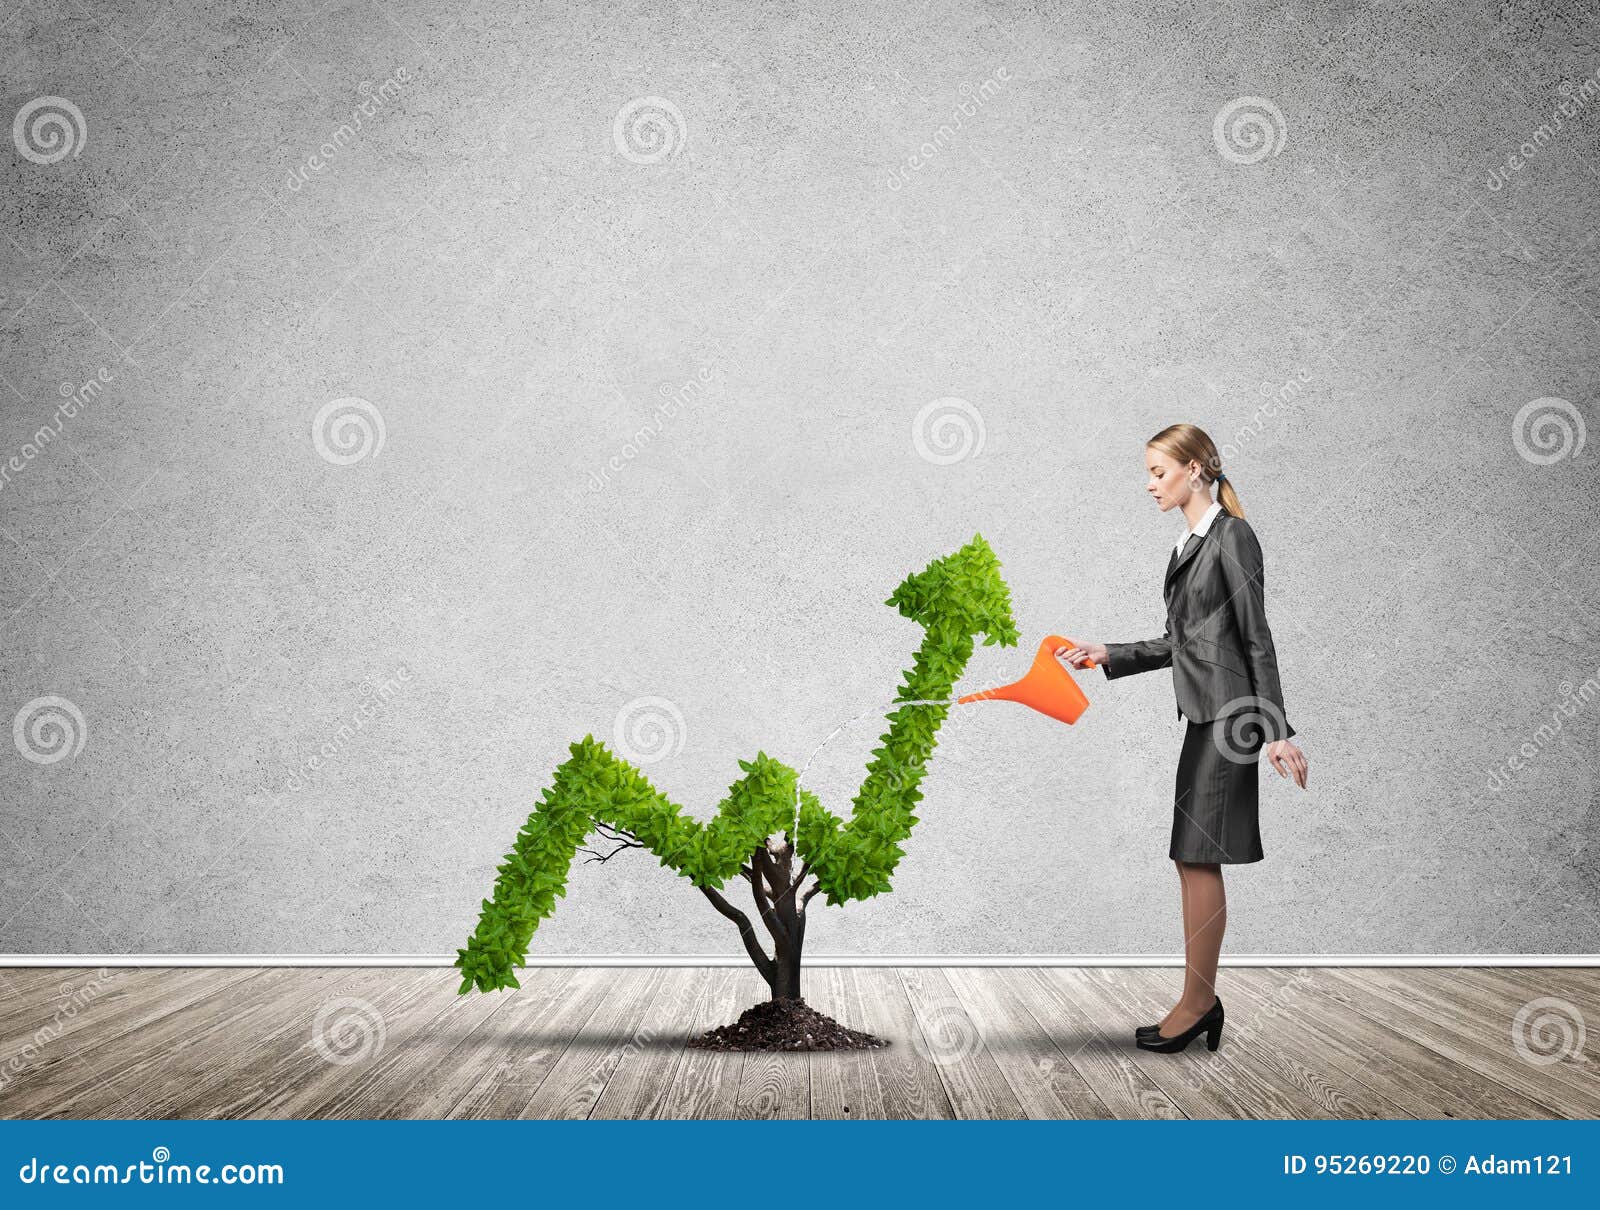 Make your money grow stock photo. Image of economy, businesswoman